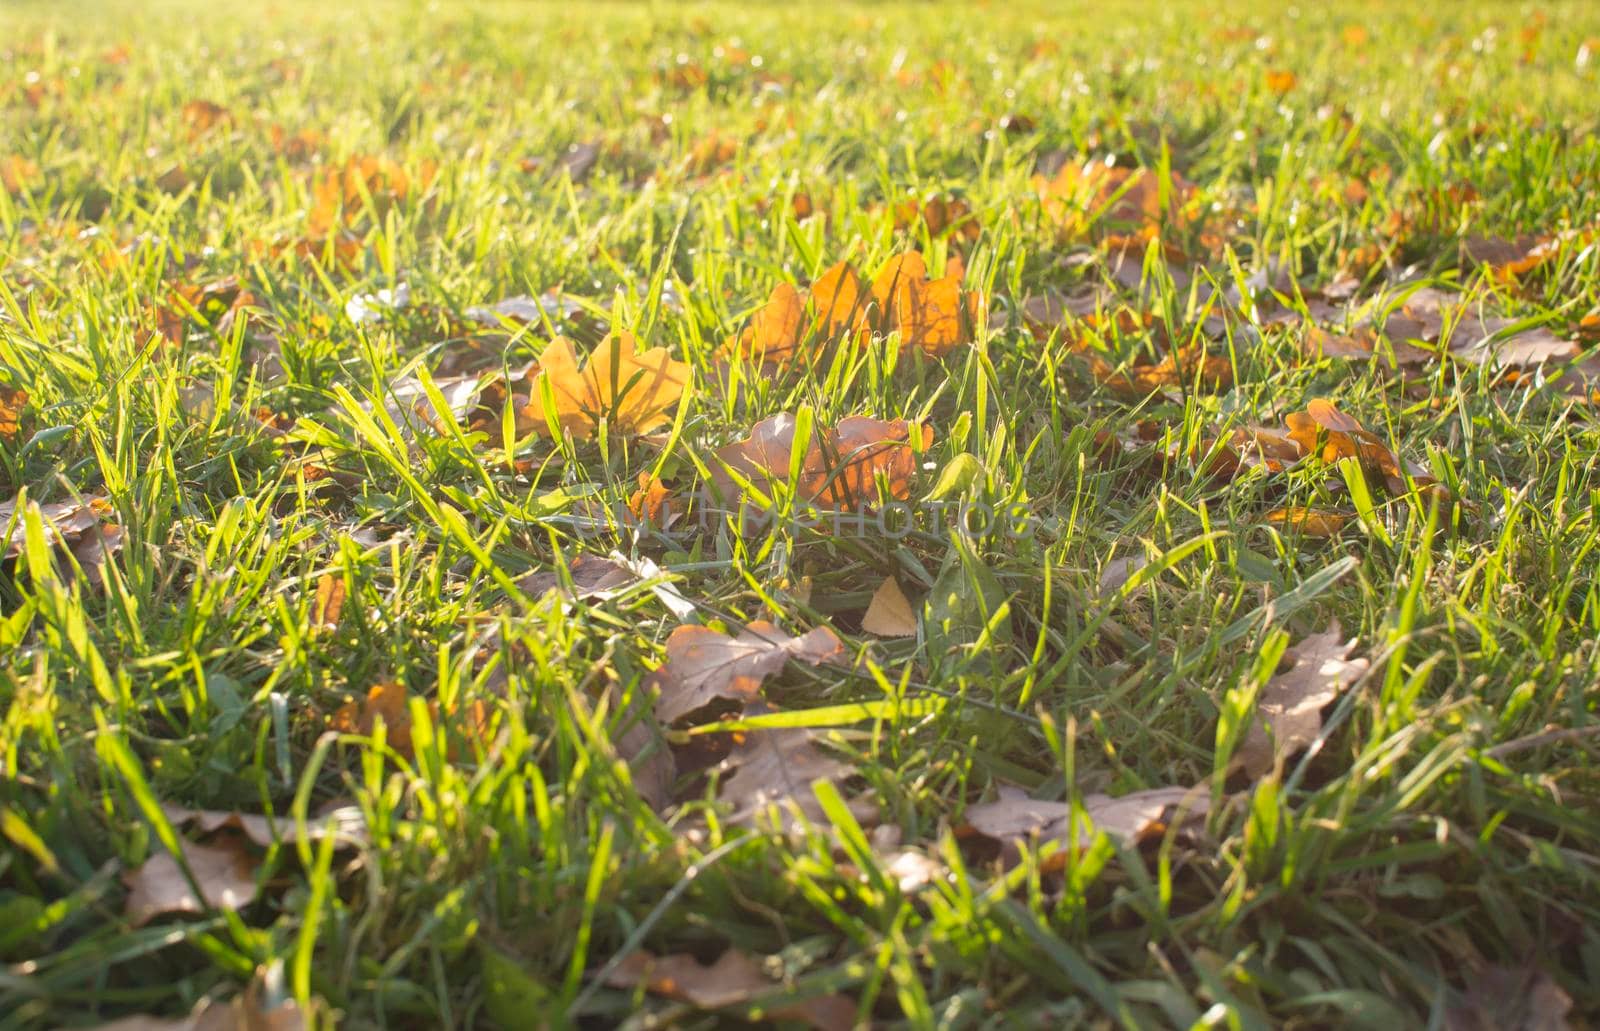 Autumn foliage. Autumn leaves fallen on the ground. Fall leaf. High quality photo